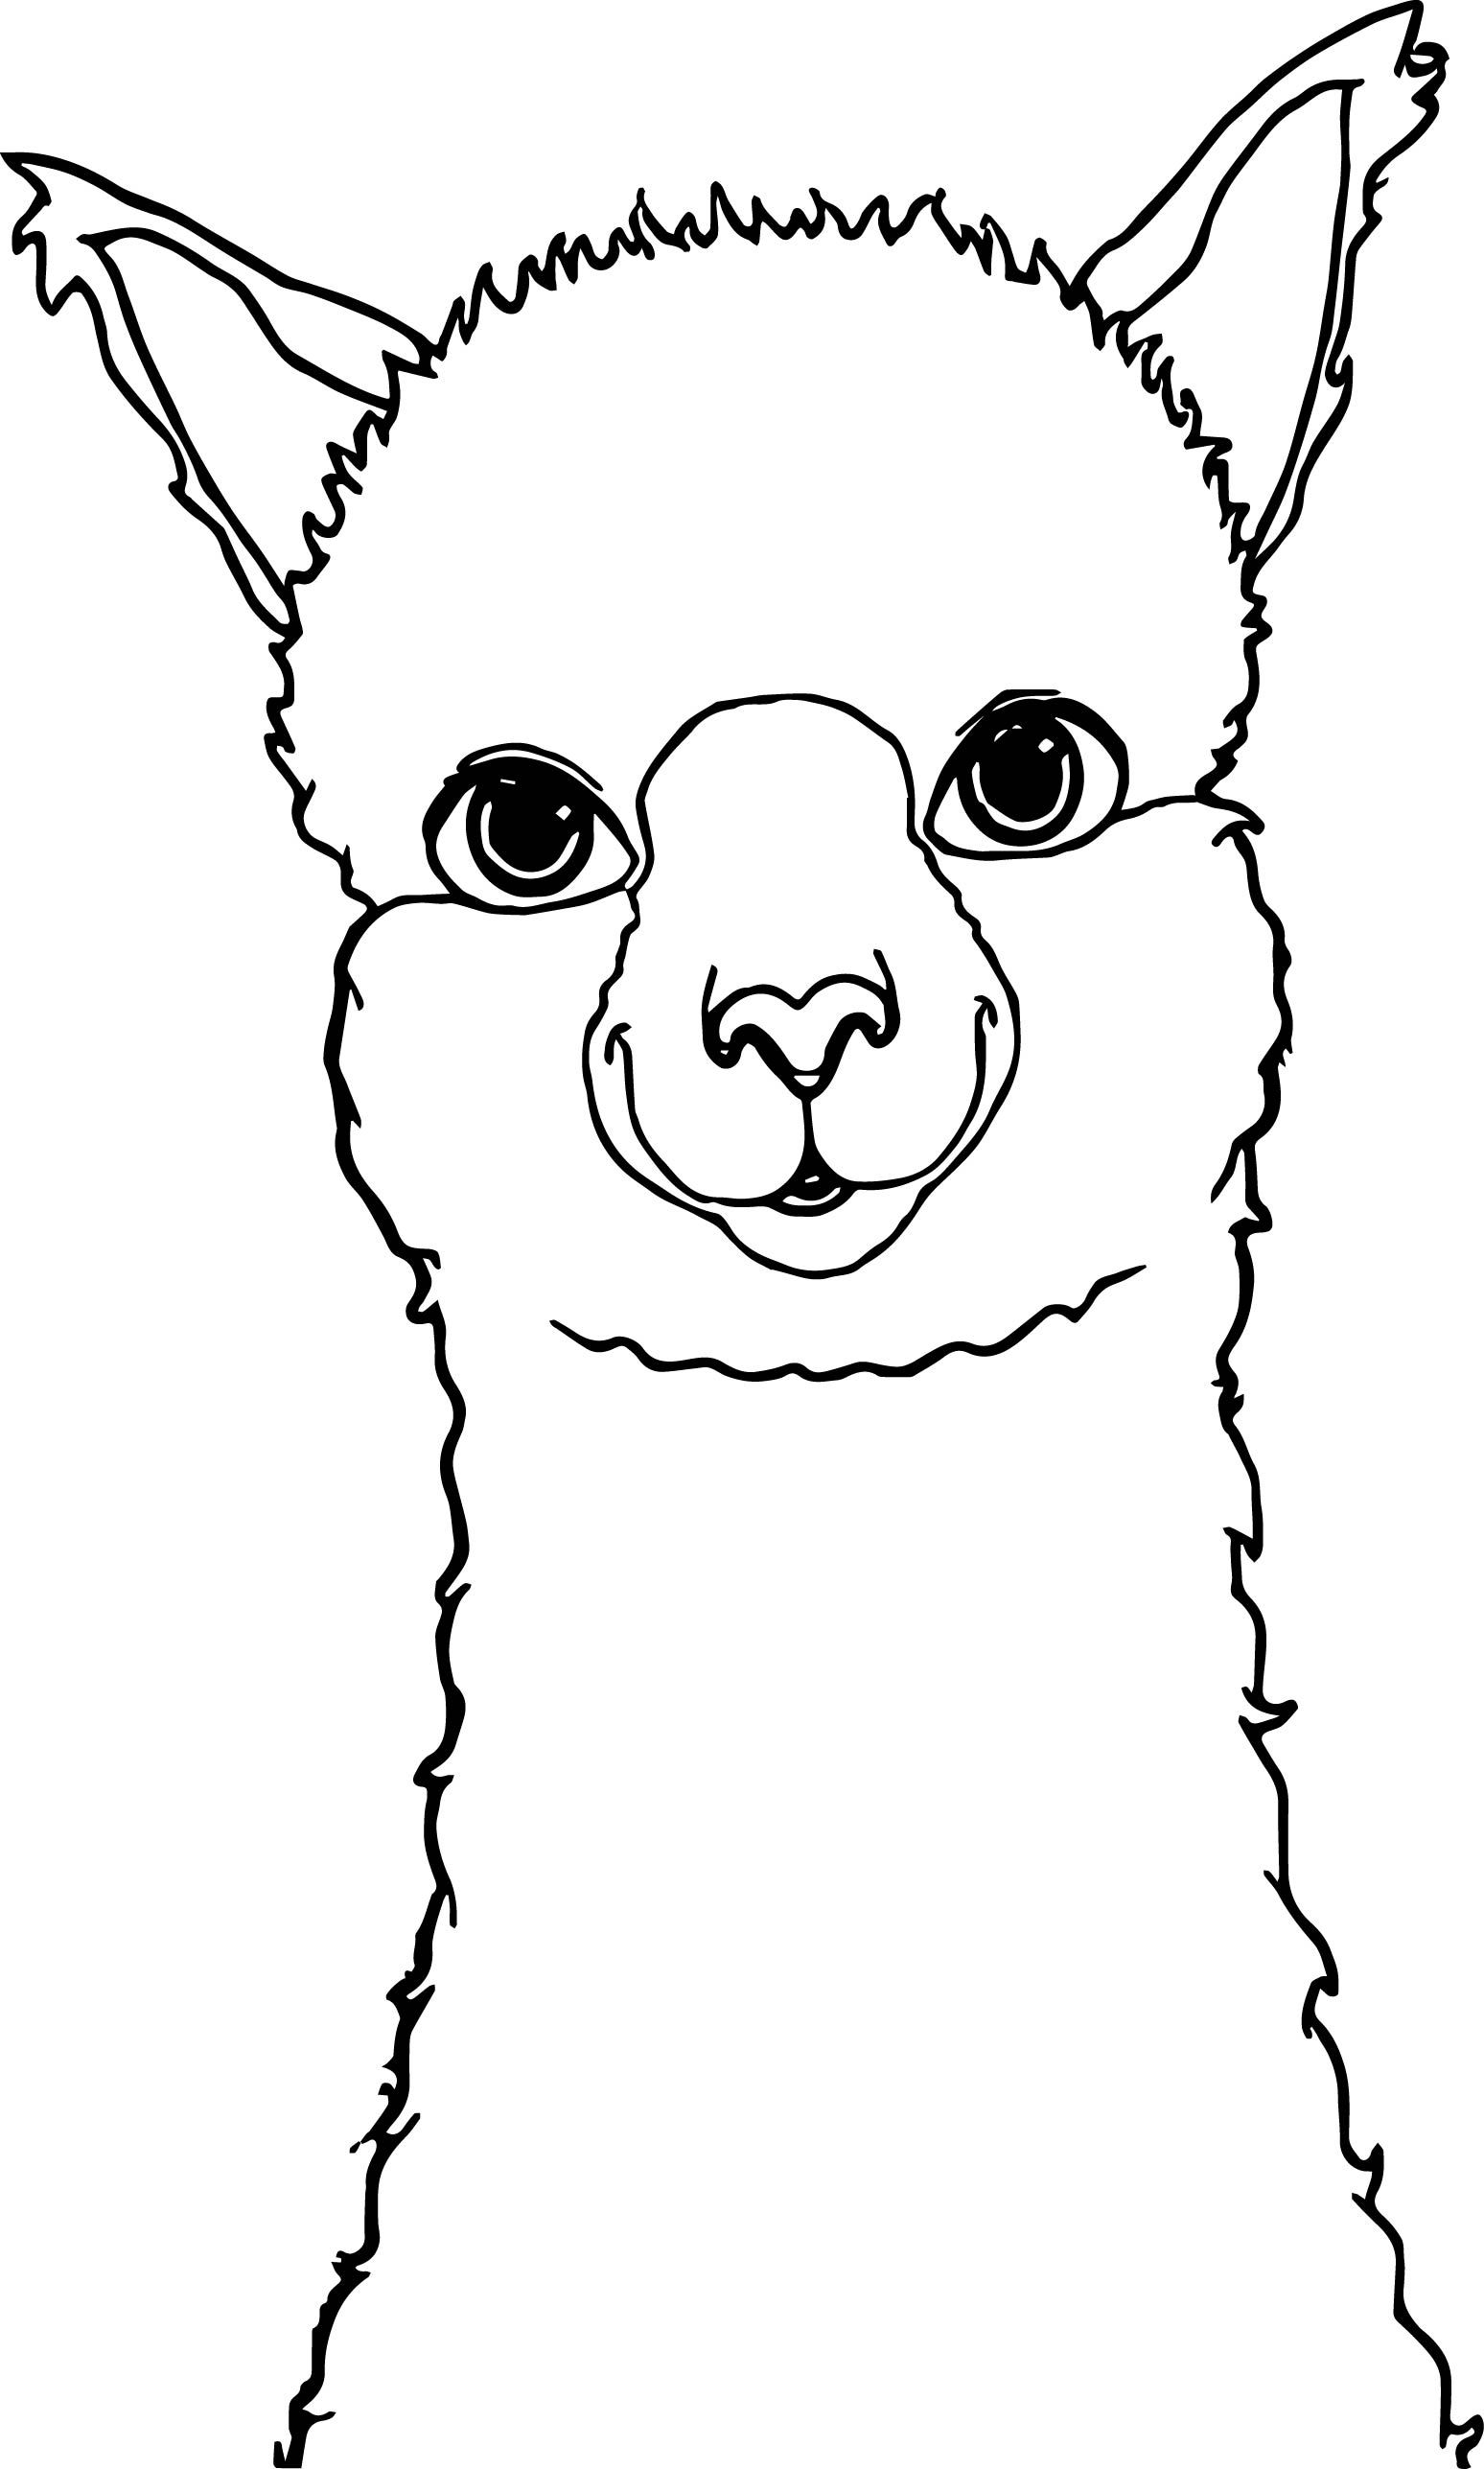 Alpaca clipart coloring page. Drawing alpacas llama and